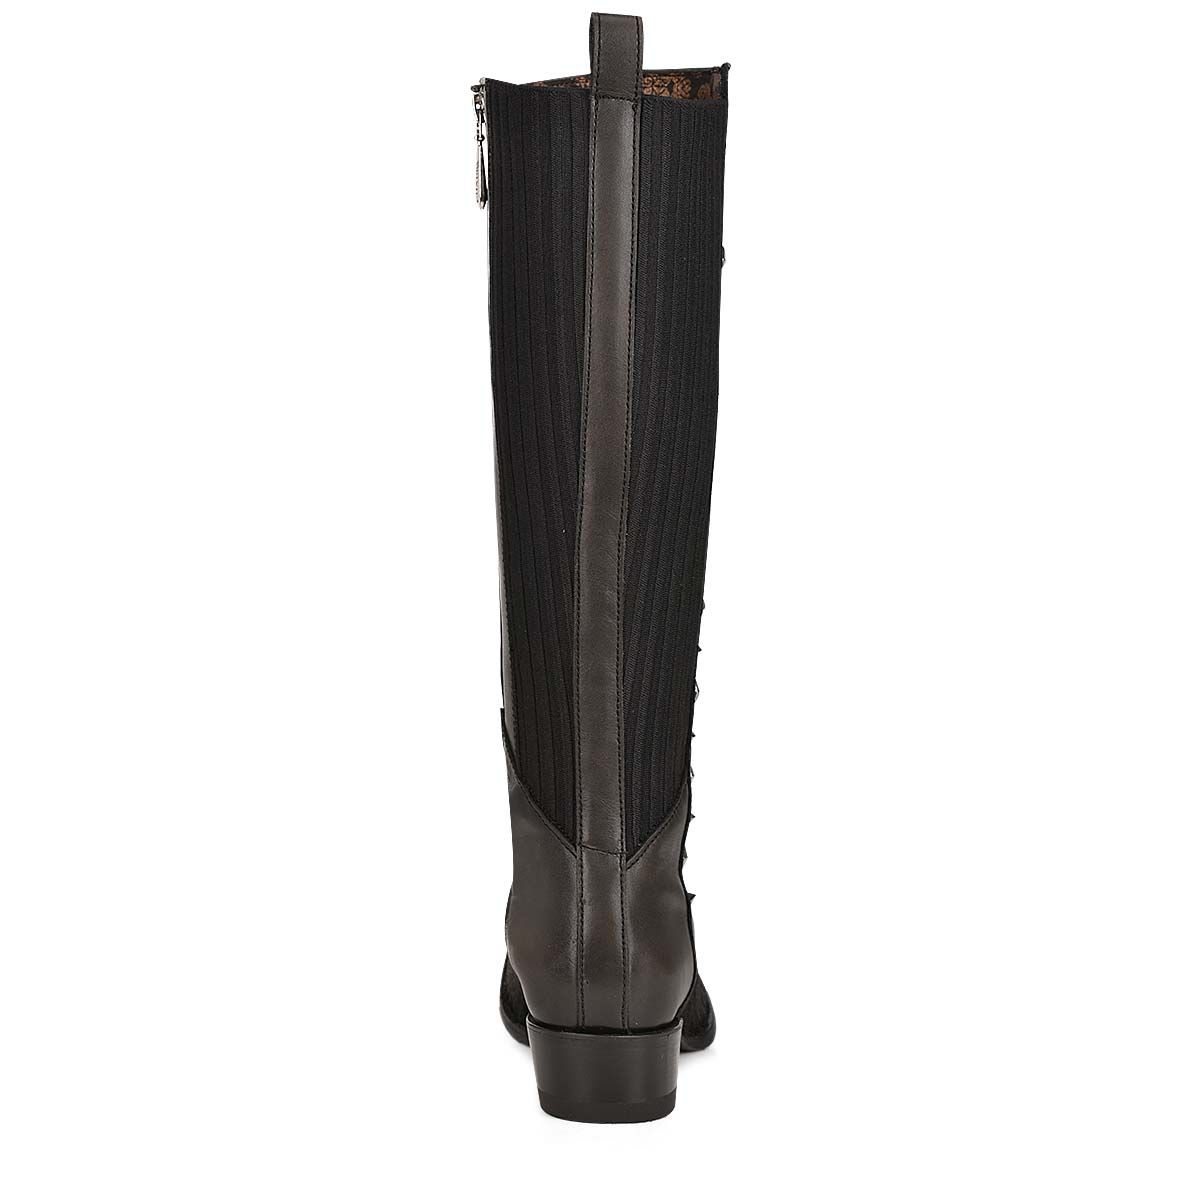 1X4FRP - Cuadra black casual fashion cowhide leather jockey boot for woman-Kuet.us